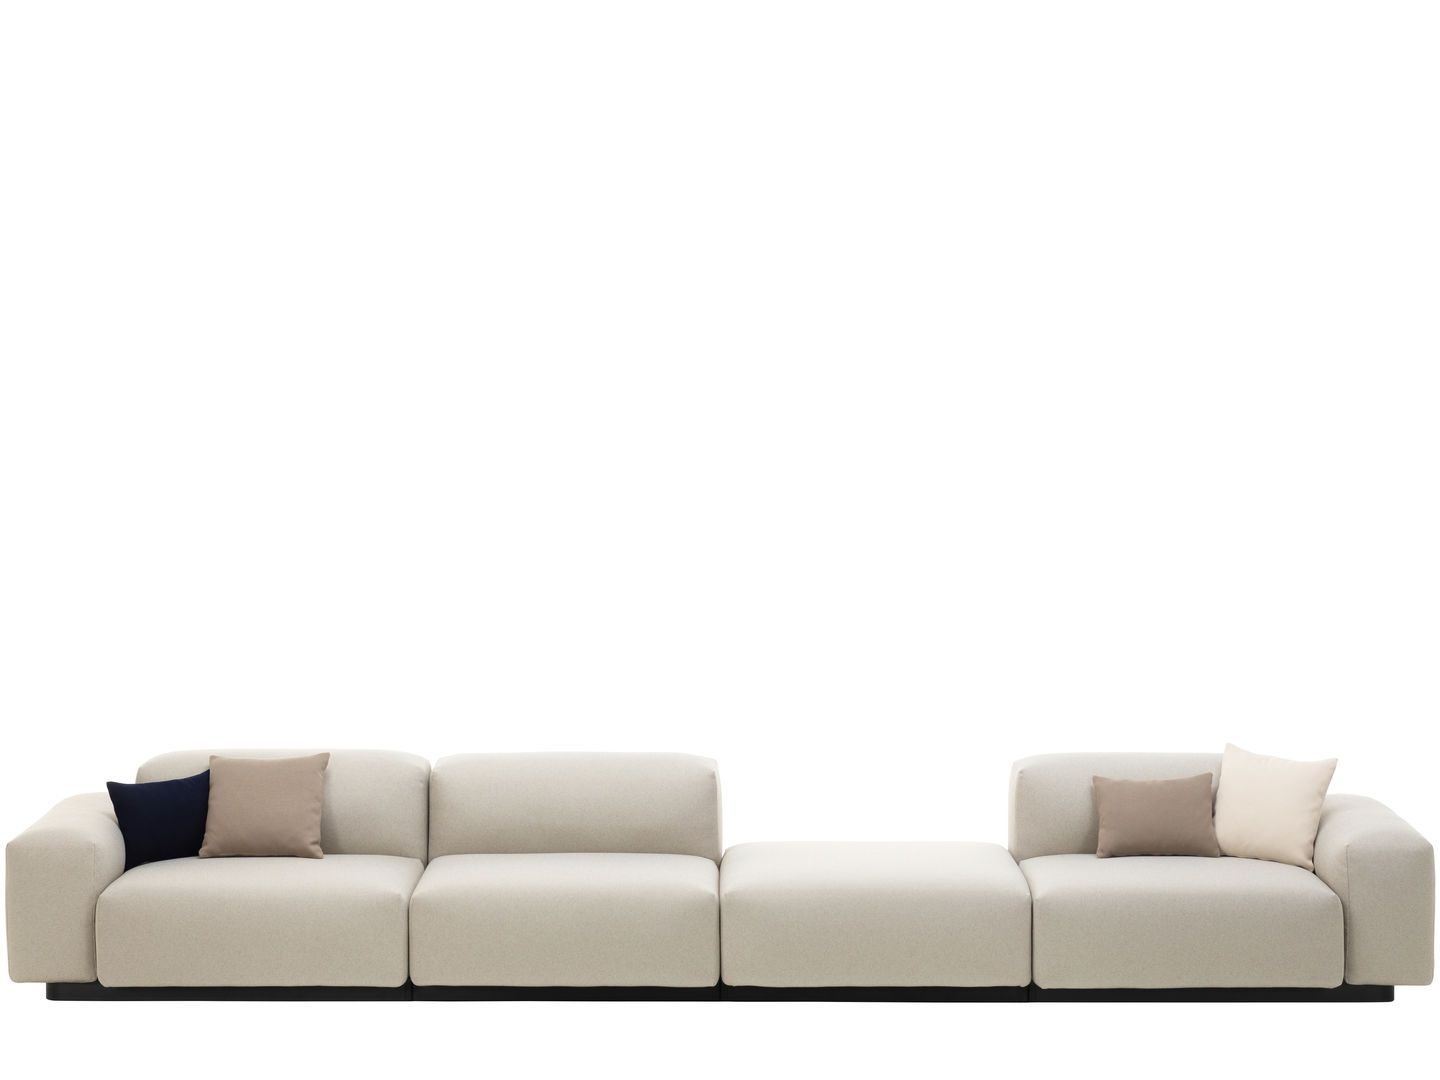 Image Alt Text: Vitra Soft Modular Sofa four-seater, platform on One52 Furniture website